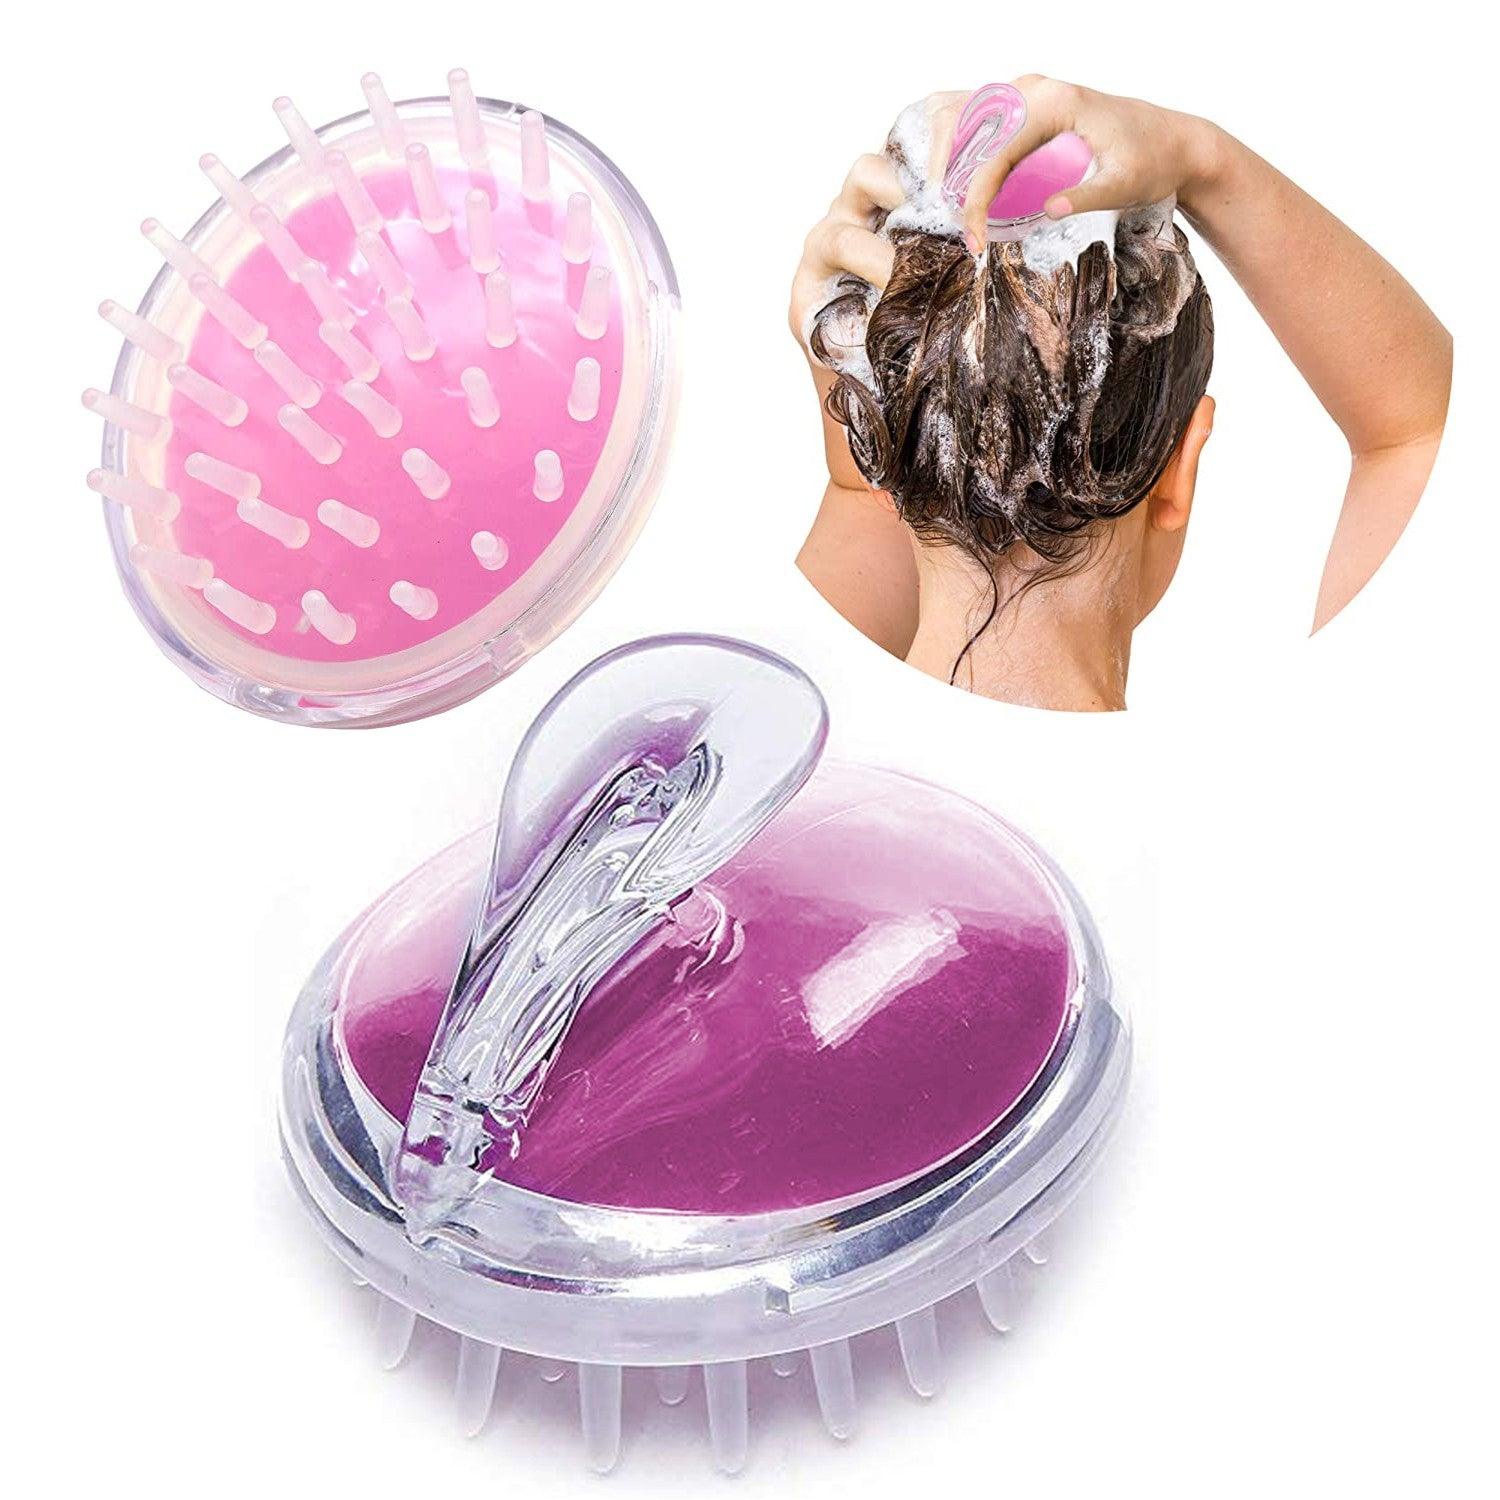 Hair Massager, Shampoo Massage, for Natural Hair Care, Scrubber, Pink, Plastic - MARKET 99